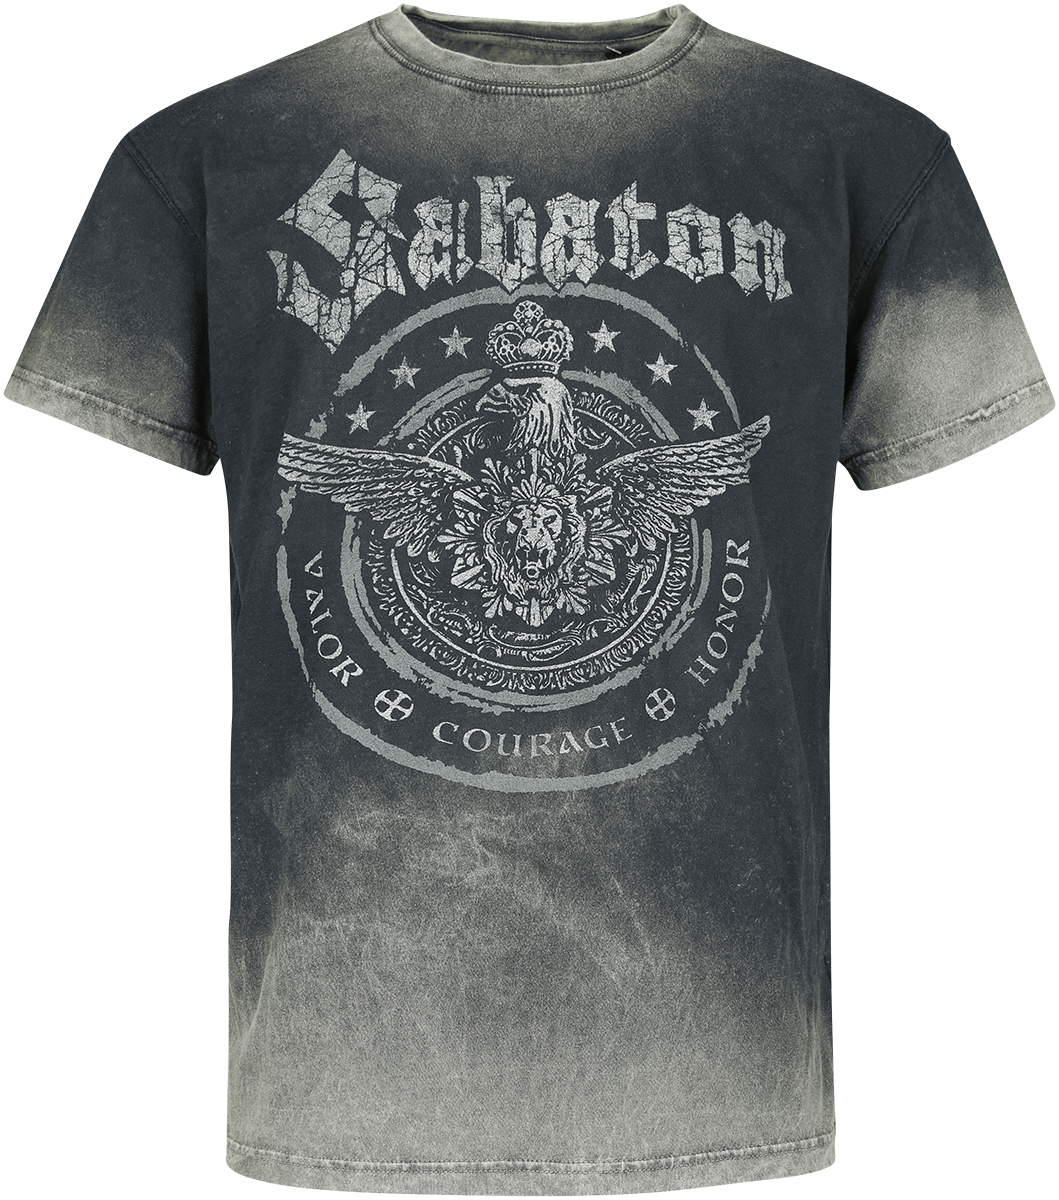 Sabaton - Valor Courage Honor - T-Shirt - charcoal - EMP Exklusiv!